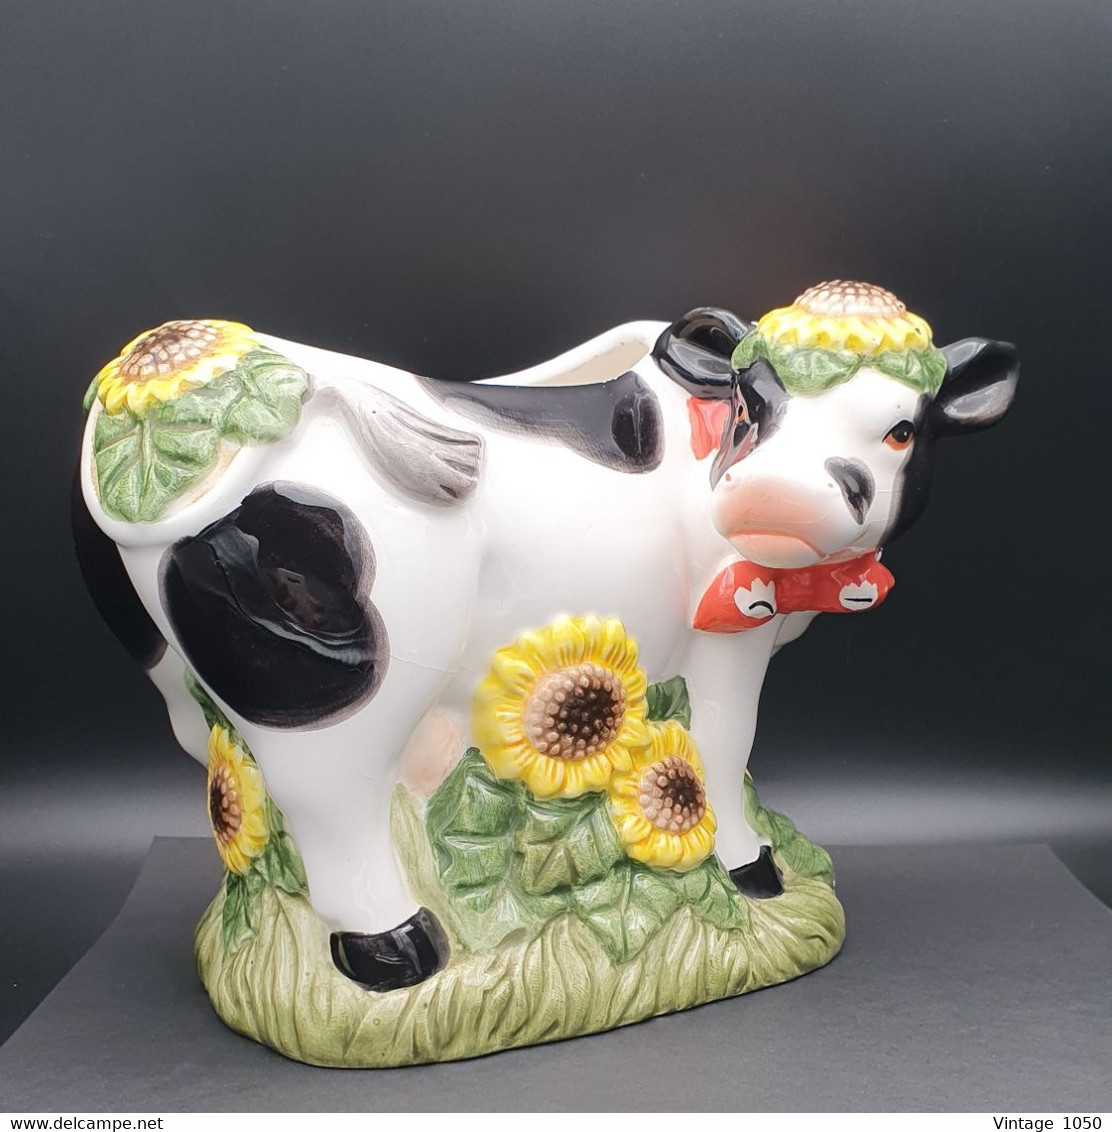 ✅Vintage Vache Bandana Creamer 1970 céramique TBE #peintmain #cow #vintage